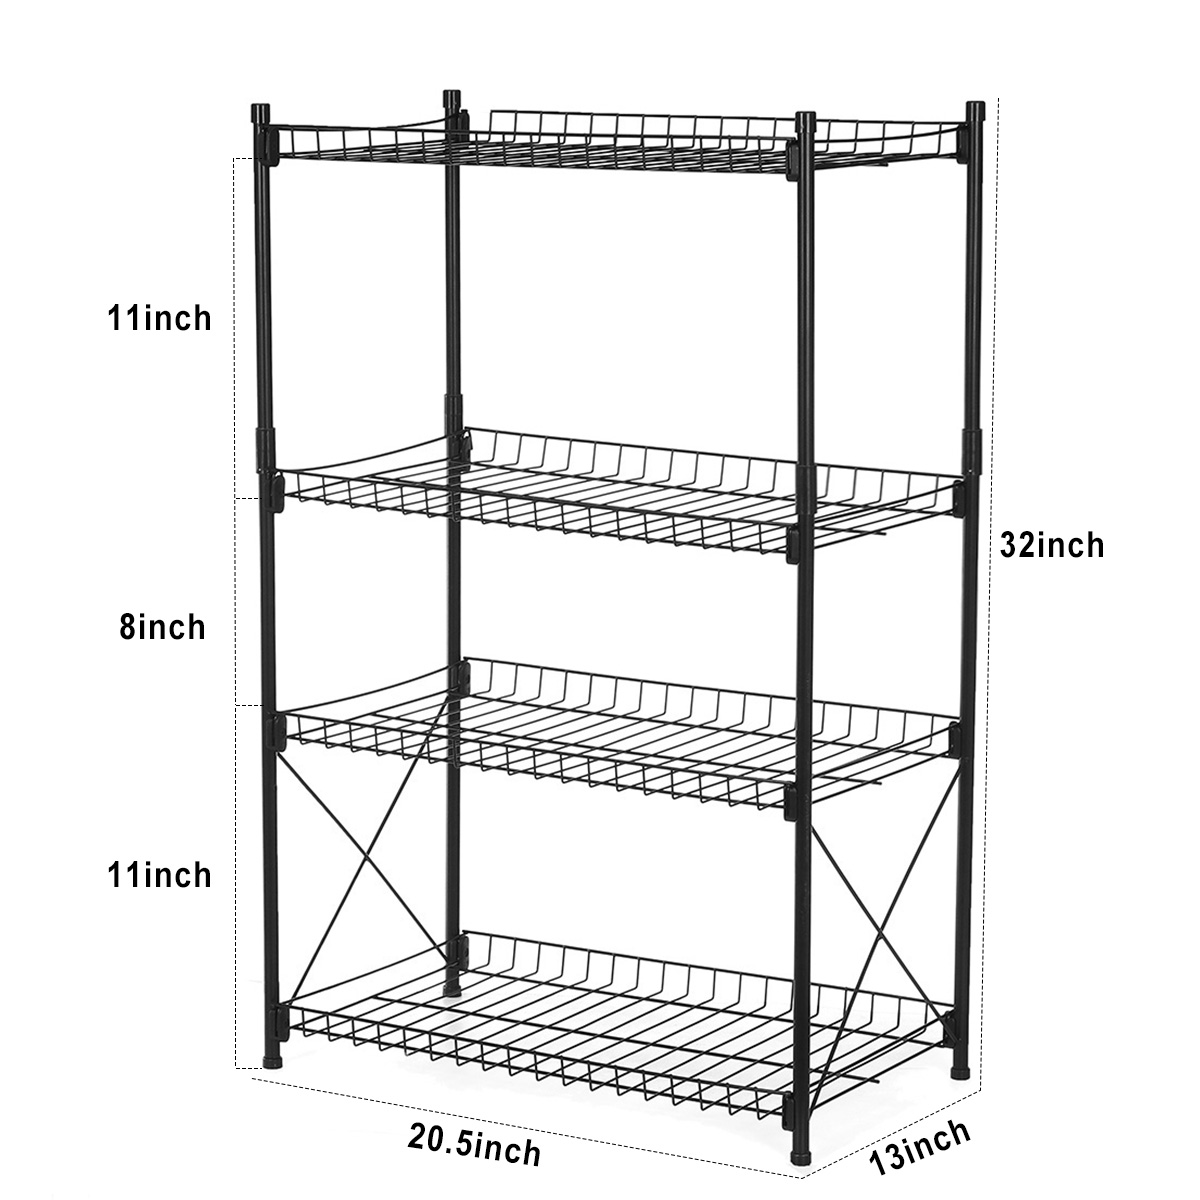 Find 3/4 Kitchen Storage Rack Floor Multi layer Storage Rack Household Steel Frame Basket Storage Rack Shelf for Sale on Gipsybee.com with cryptocurrencies